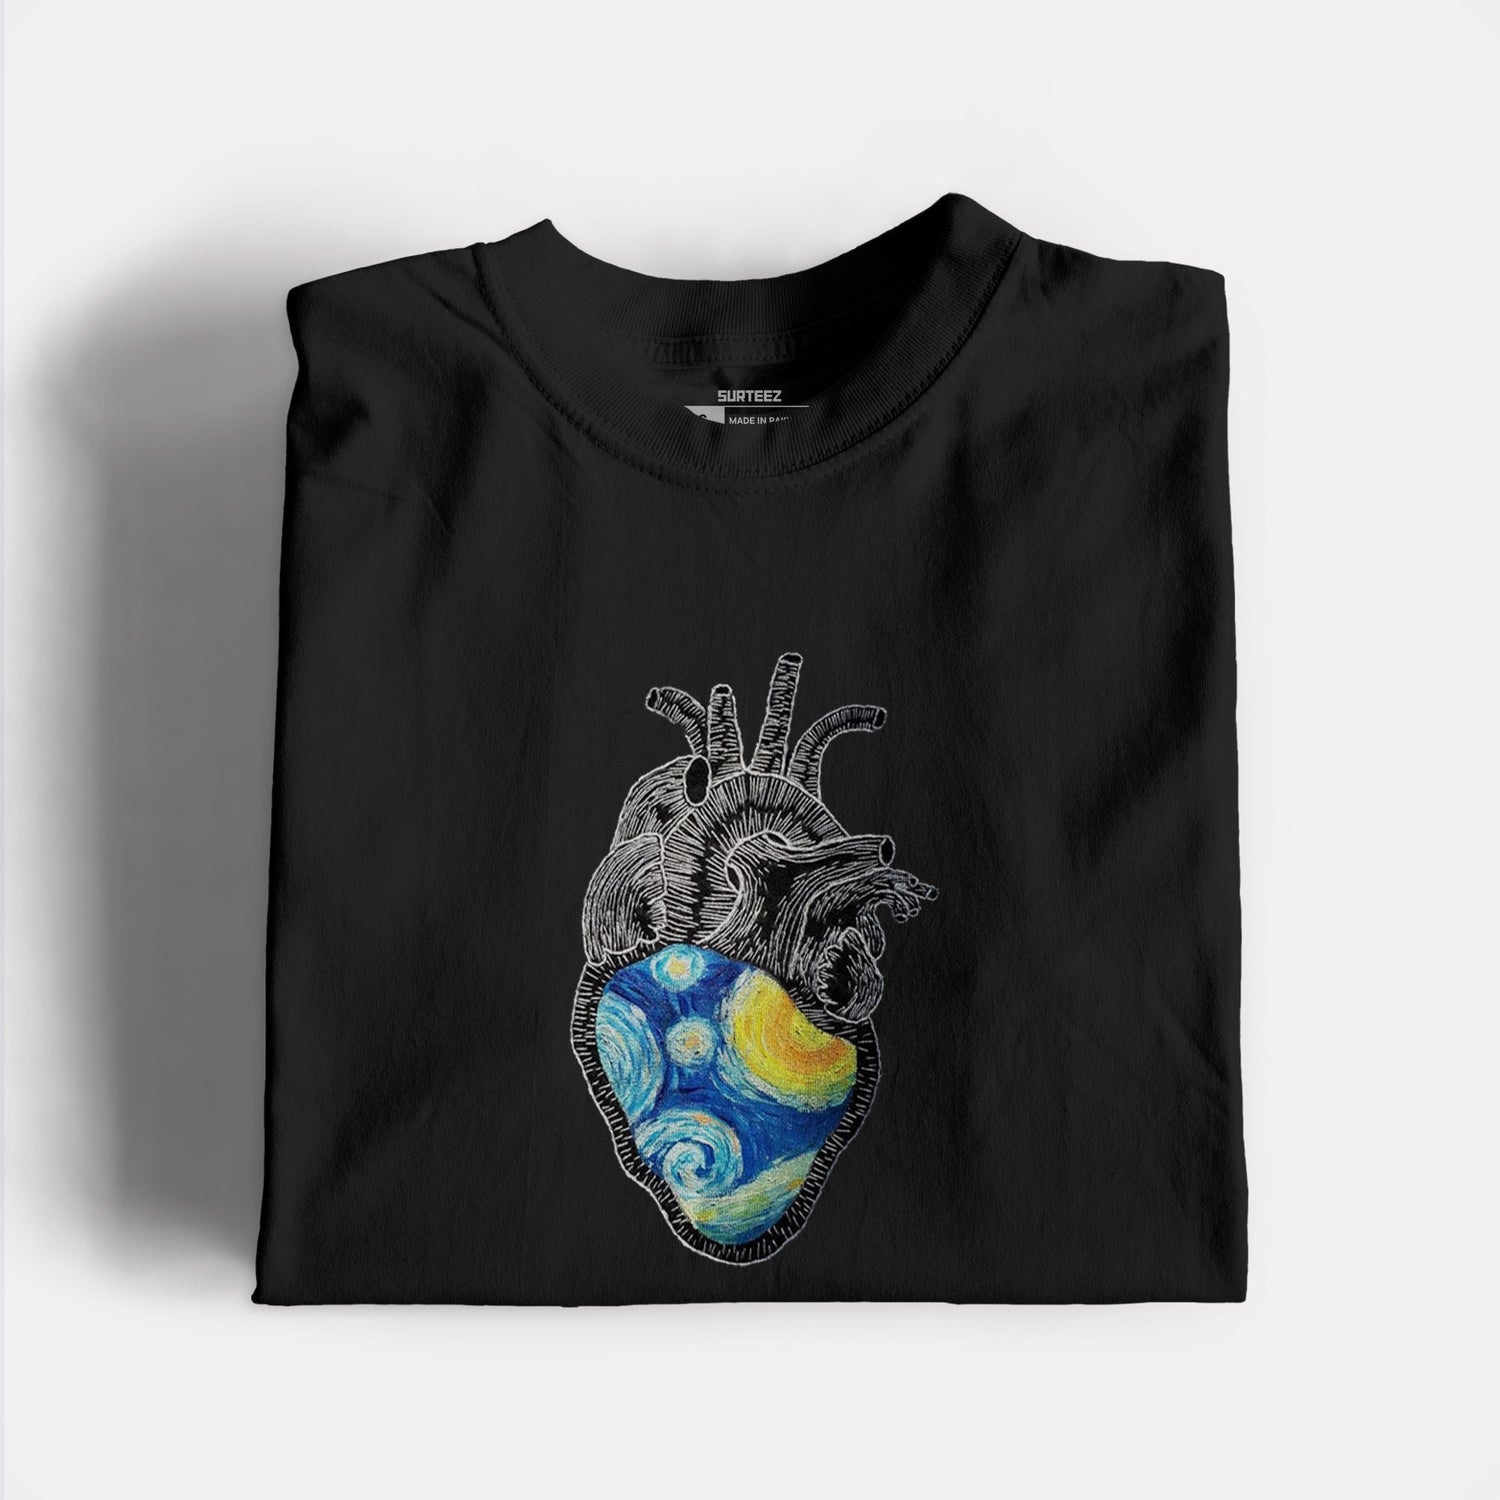 Van Gogh Heart Graphic Tshirt